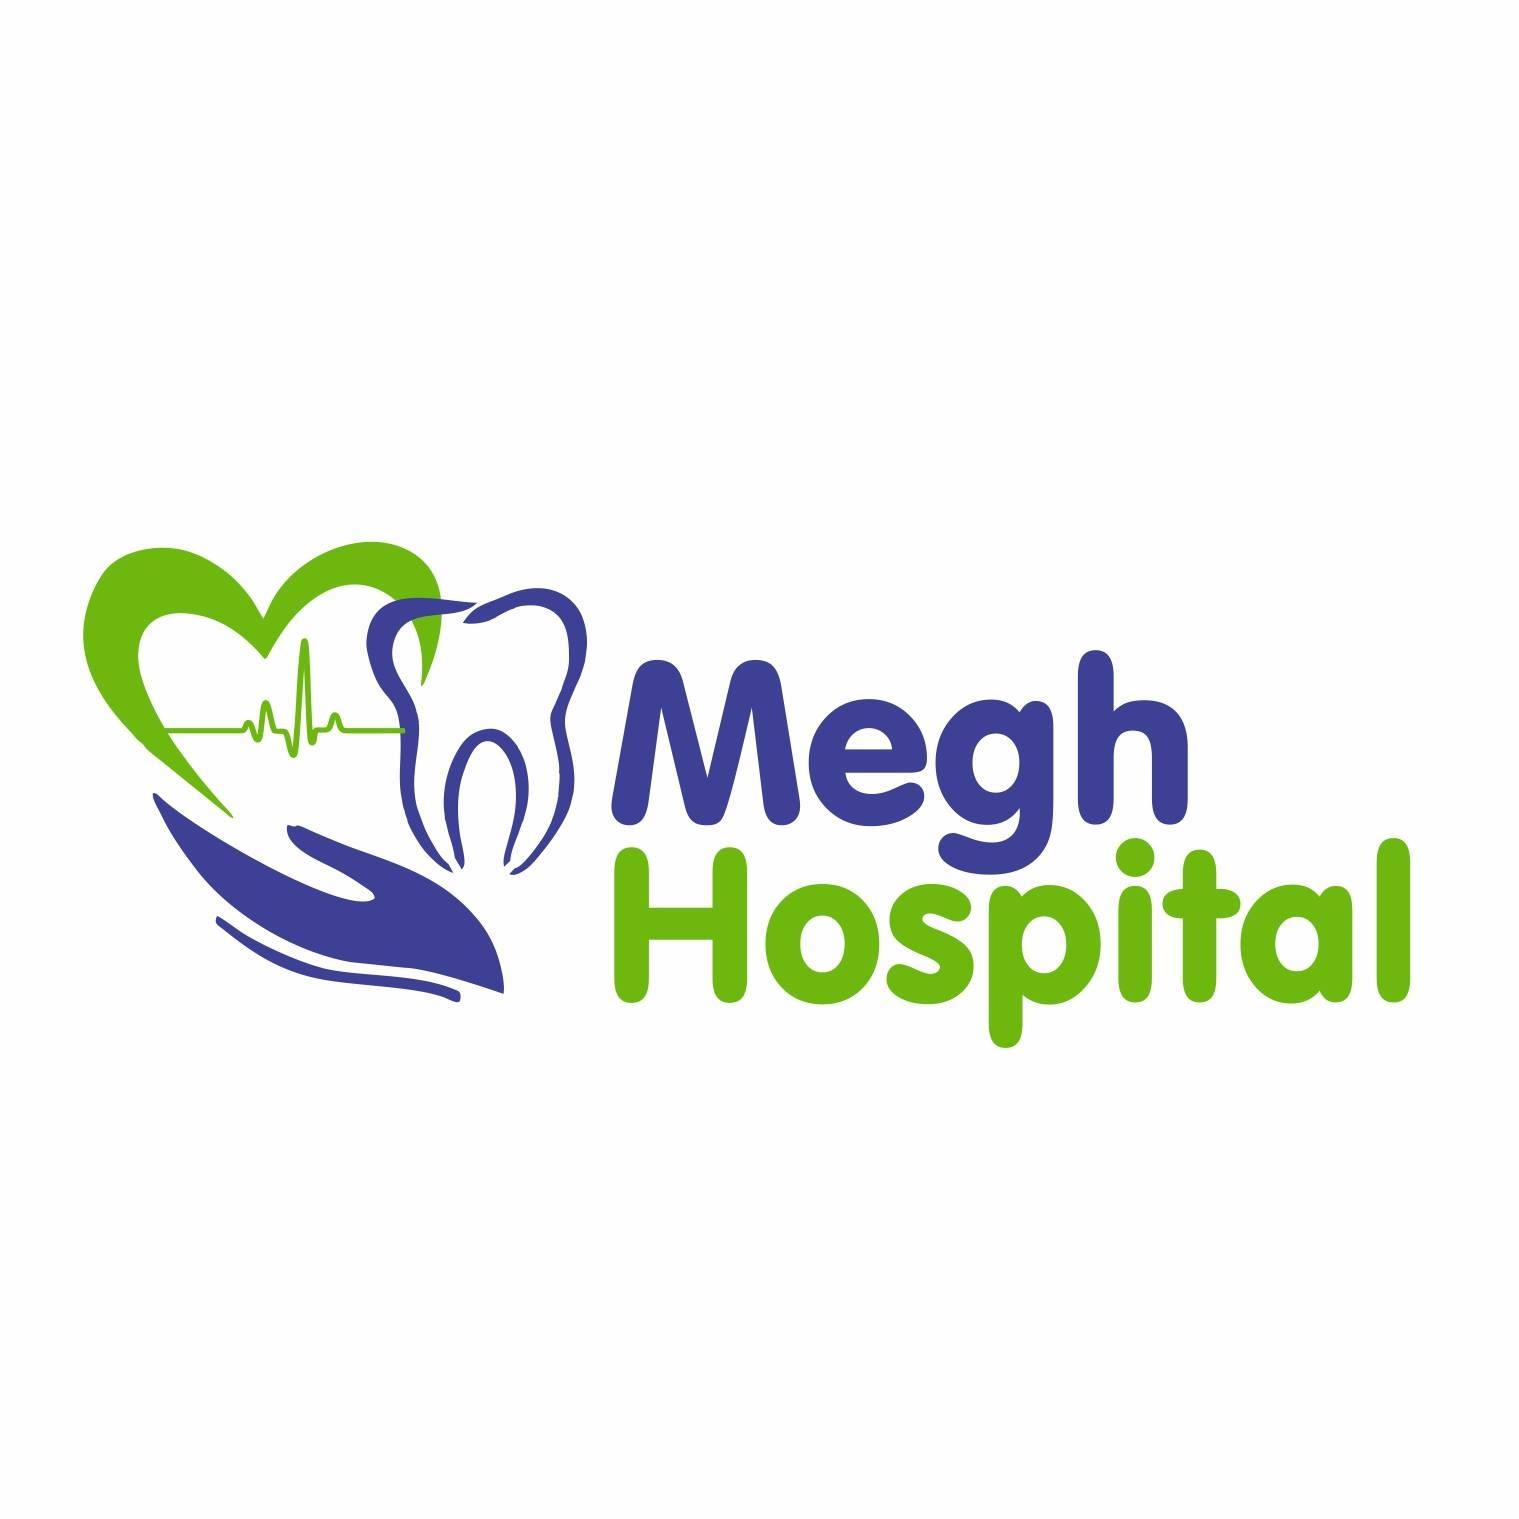 Megha Hospital